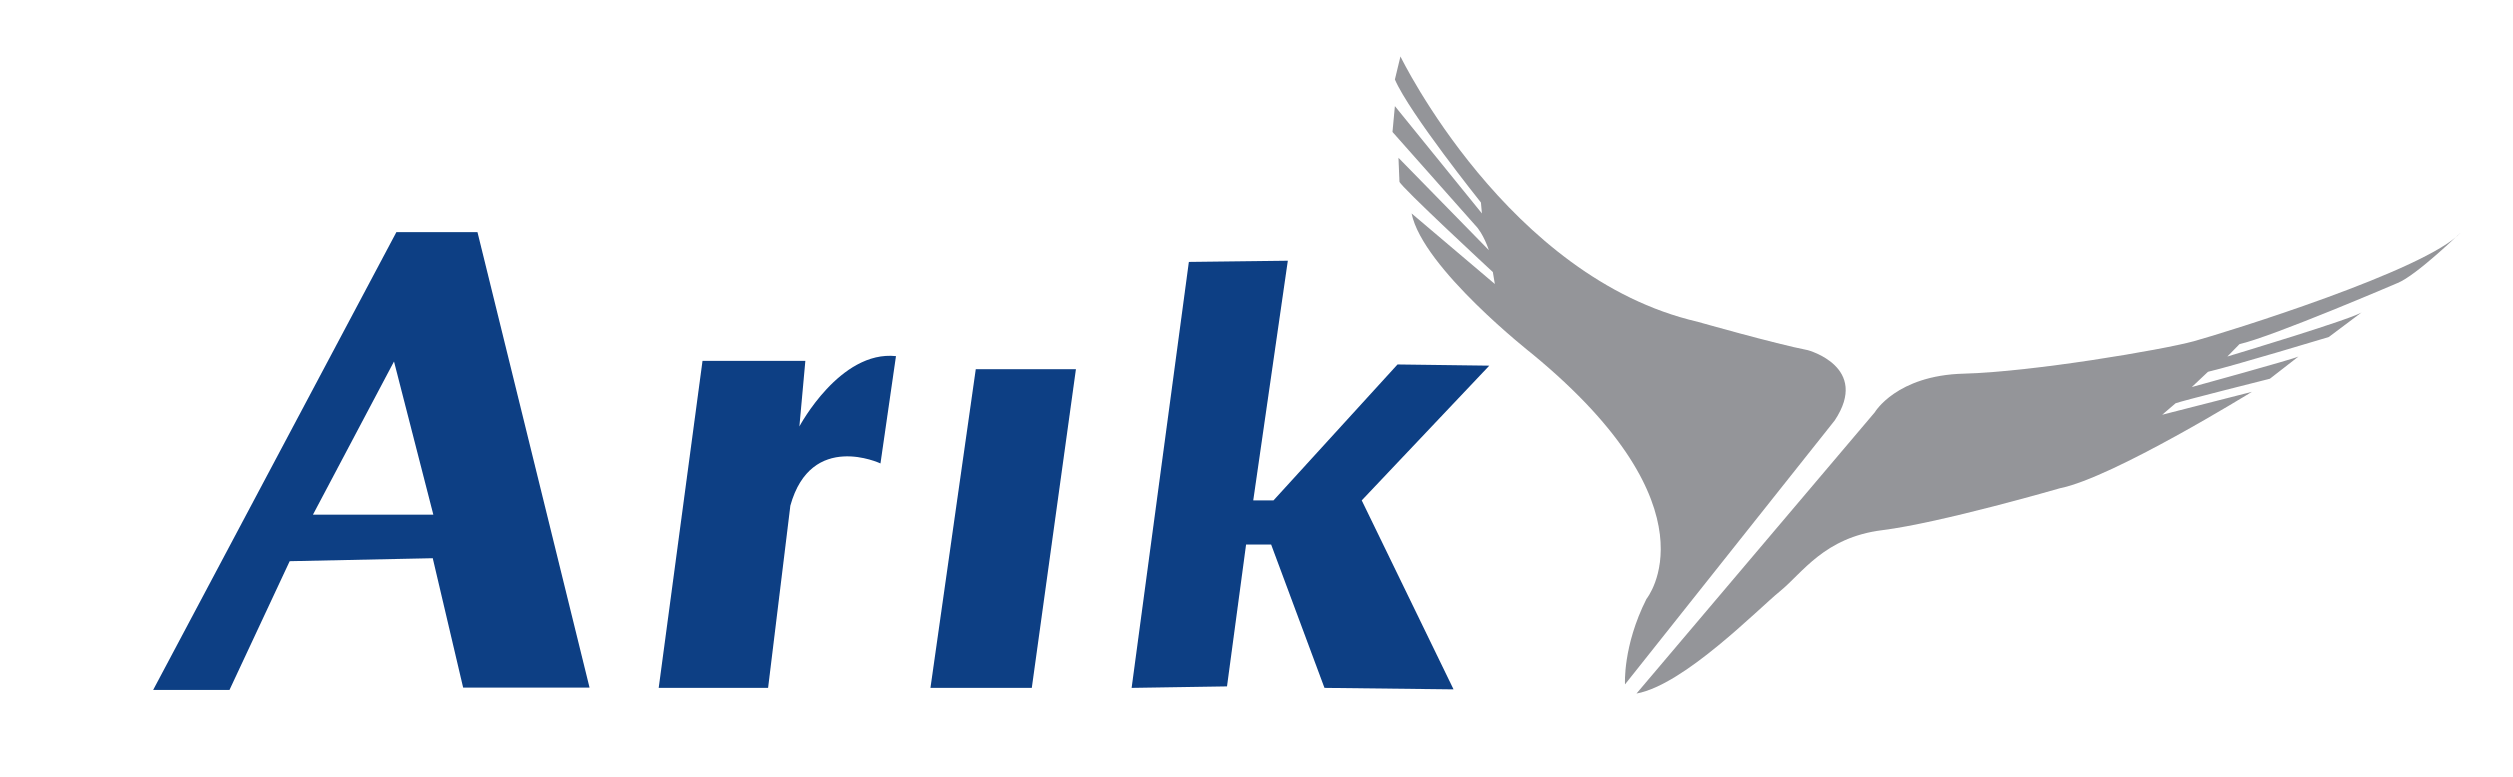 Arik_Air-Logo.wine-min